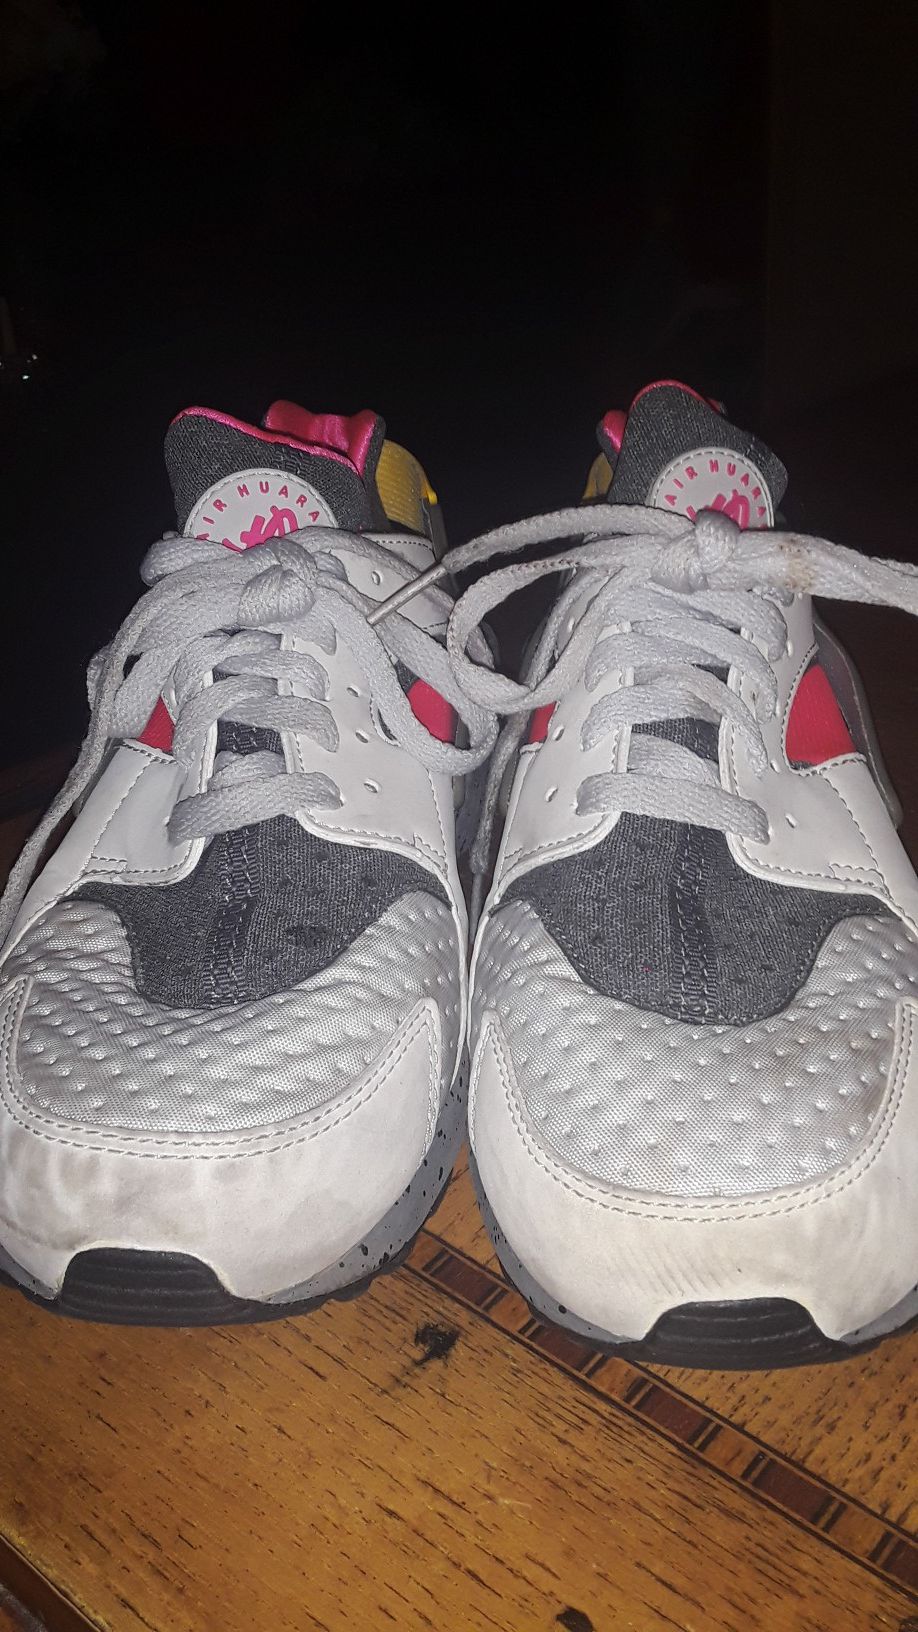 Nike Huarache tennis shoes, sz 8.5